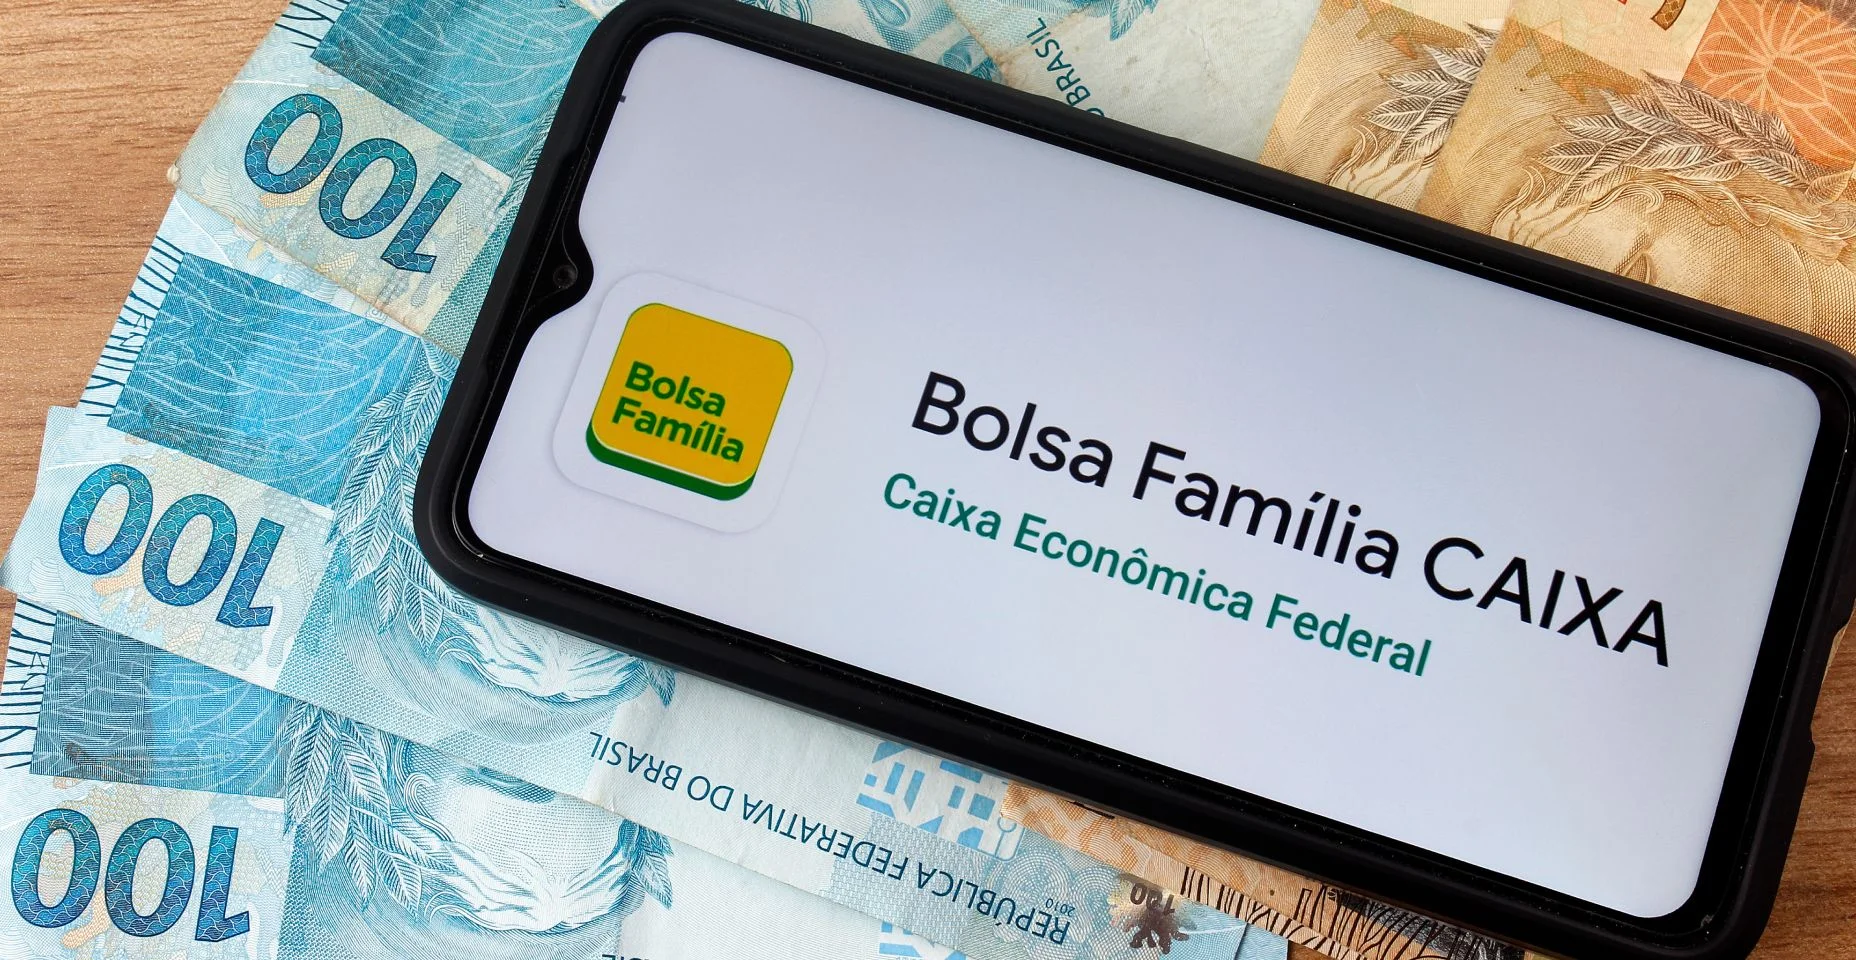 Logo Bolsa Família. Auxílio financeiro concedido pelo Governo Federal Brasileiro a famílias de baixa renda